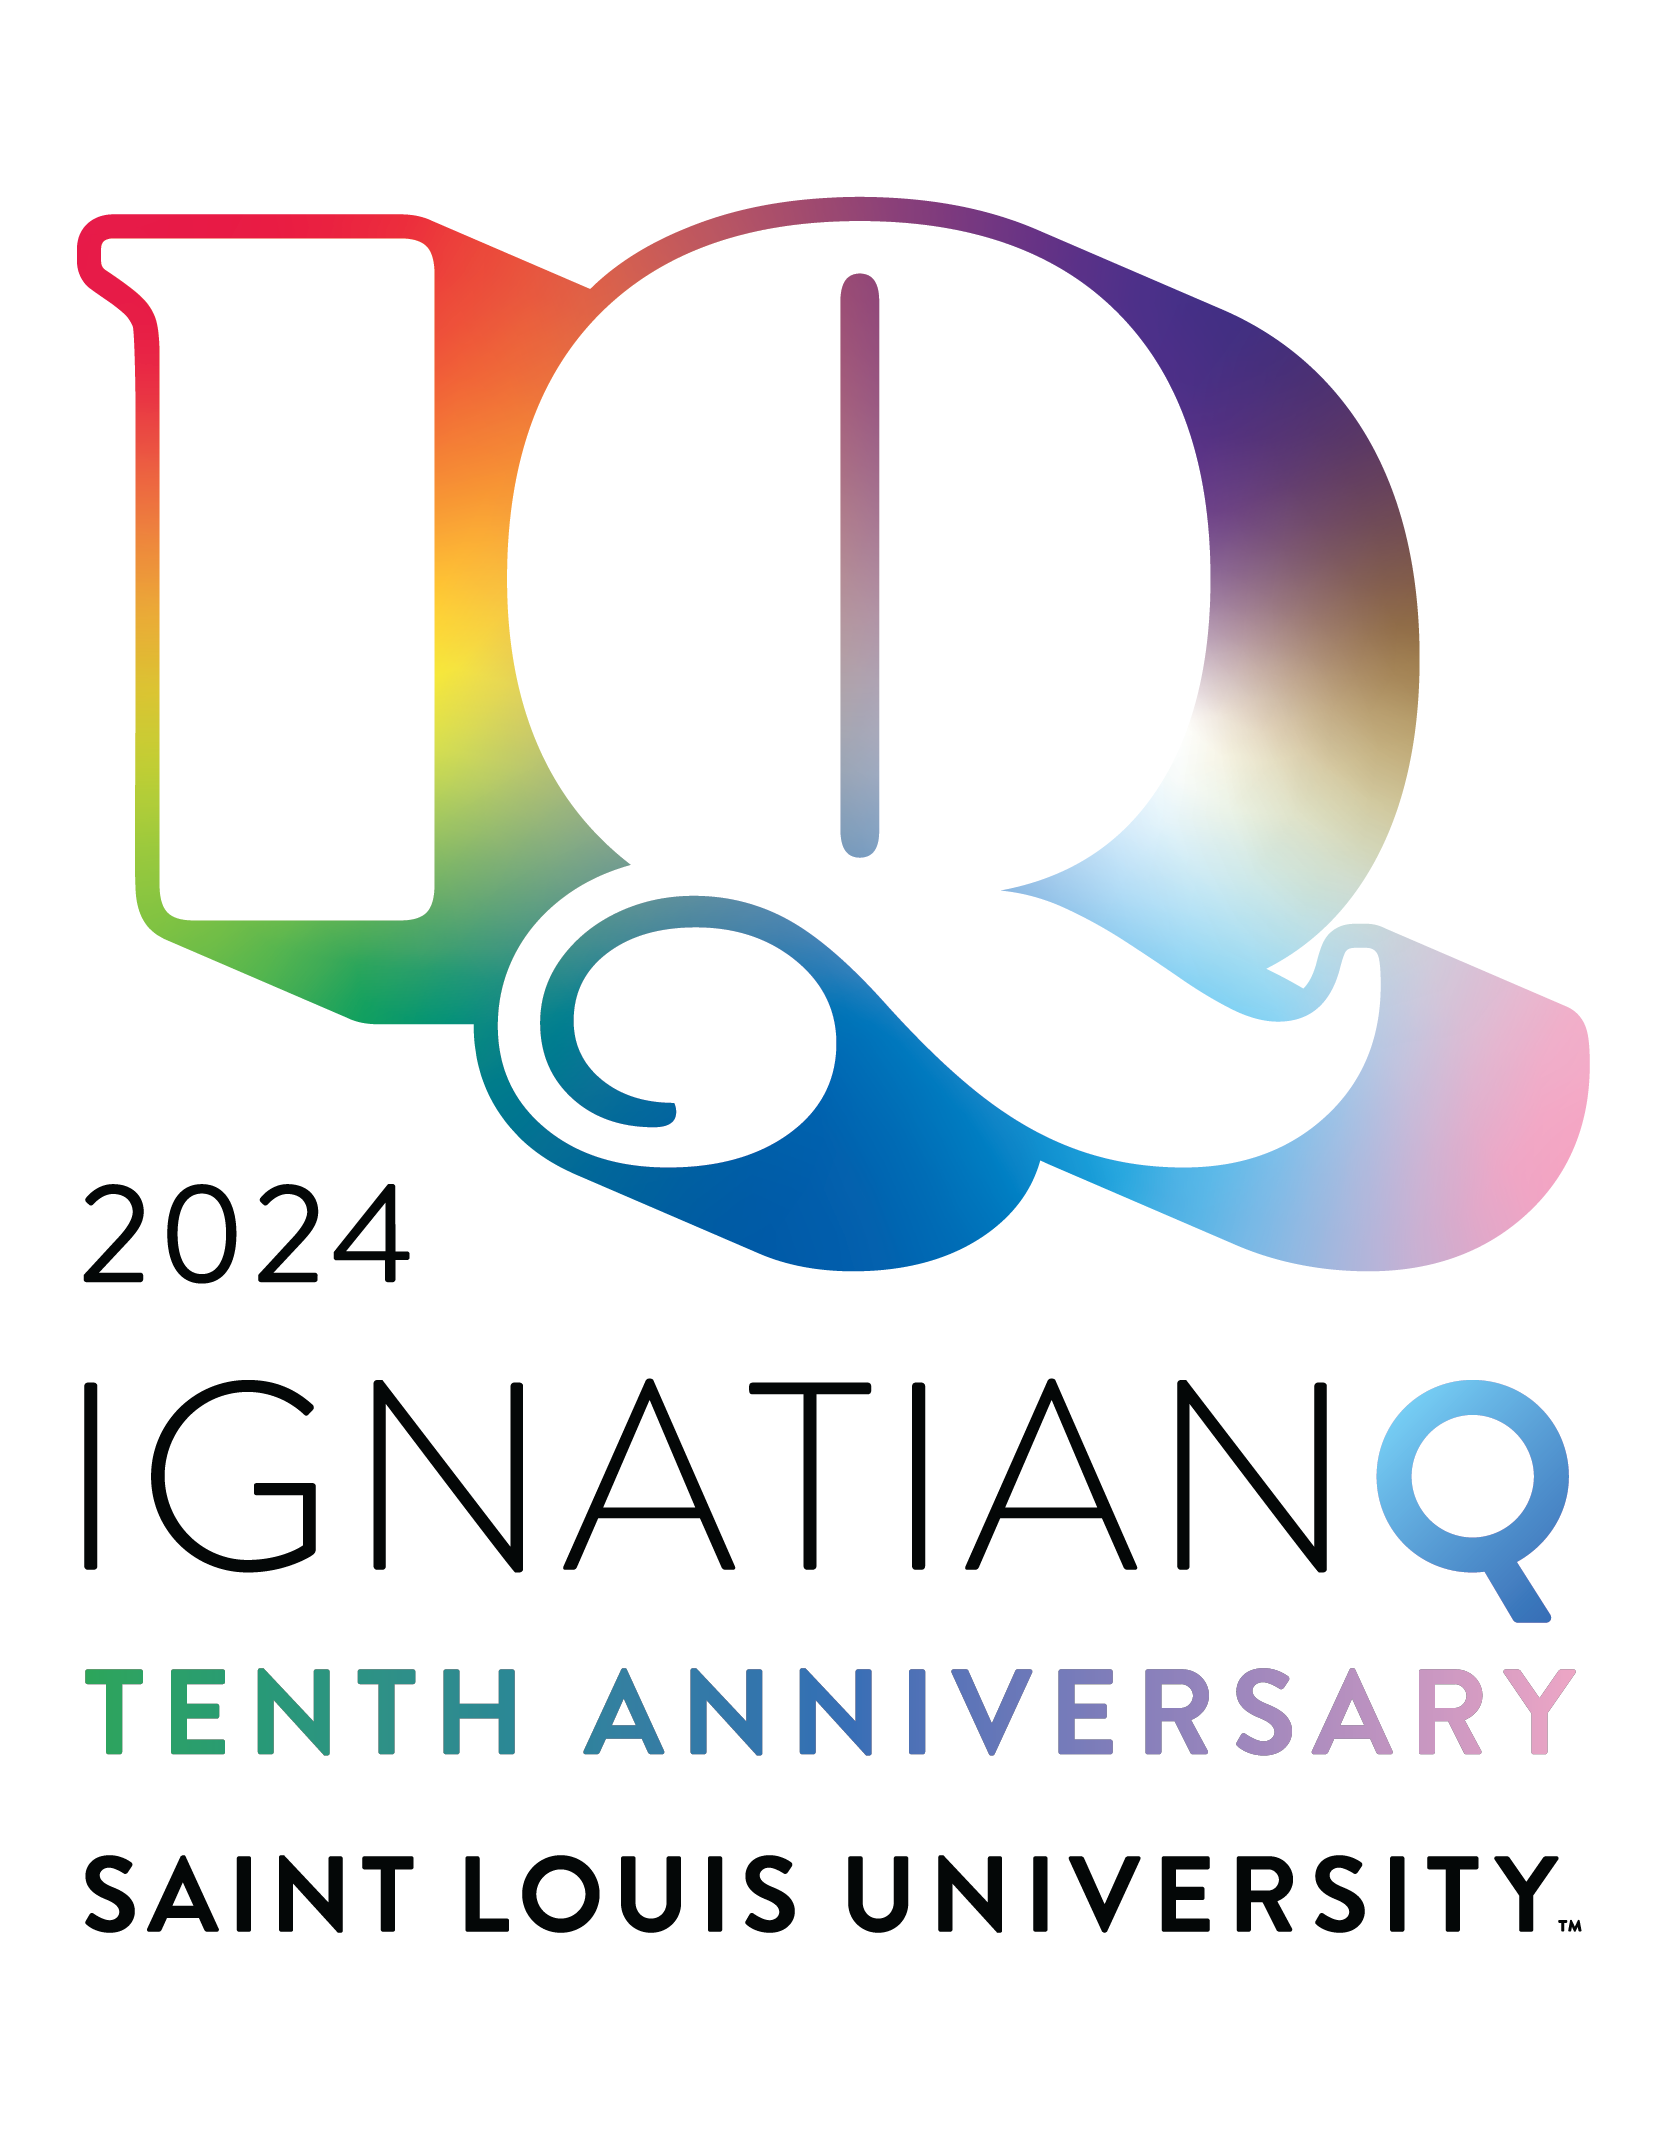 Ignatian Q Confefrence logo text includes 10th Anniversary at Saint Louis University